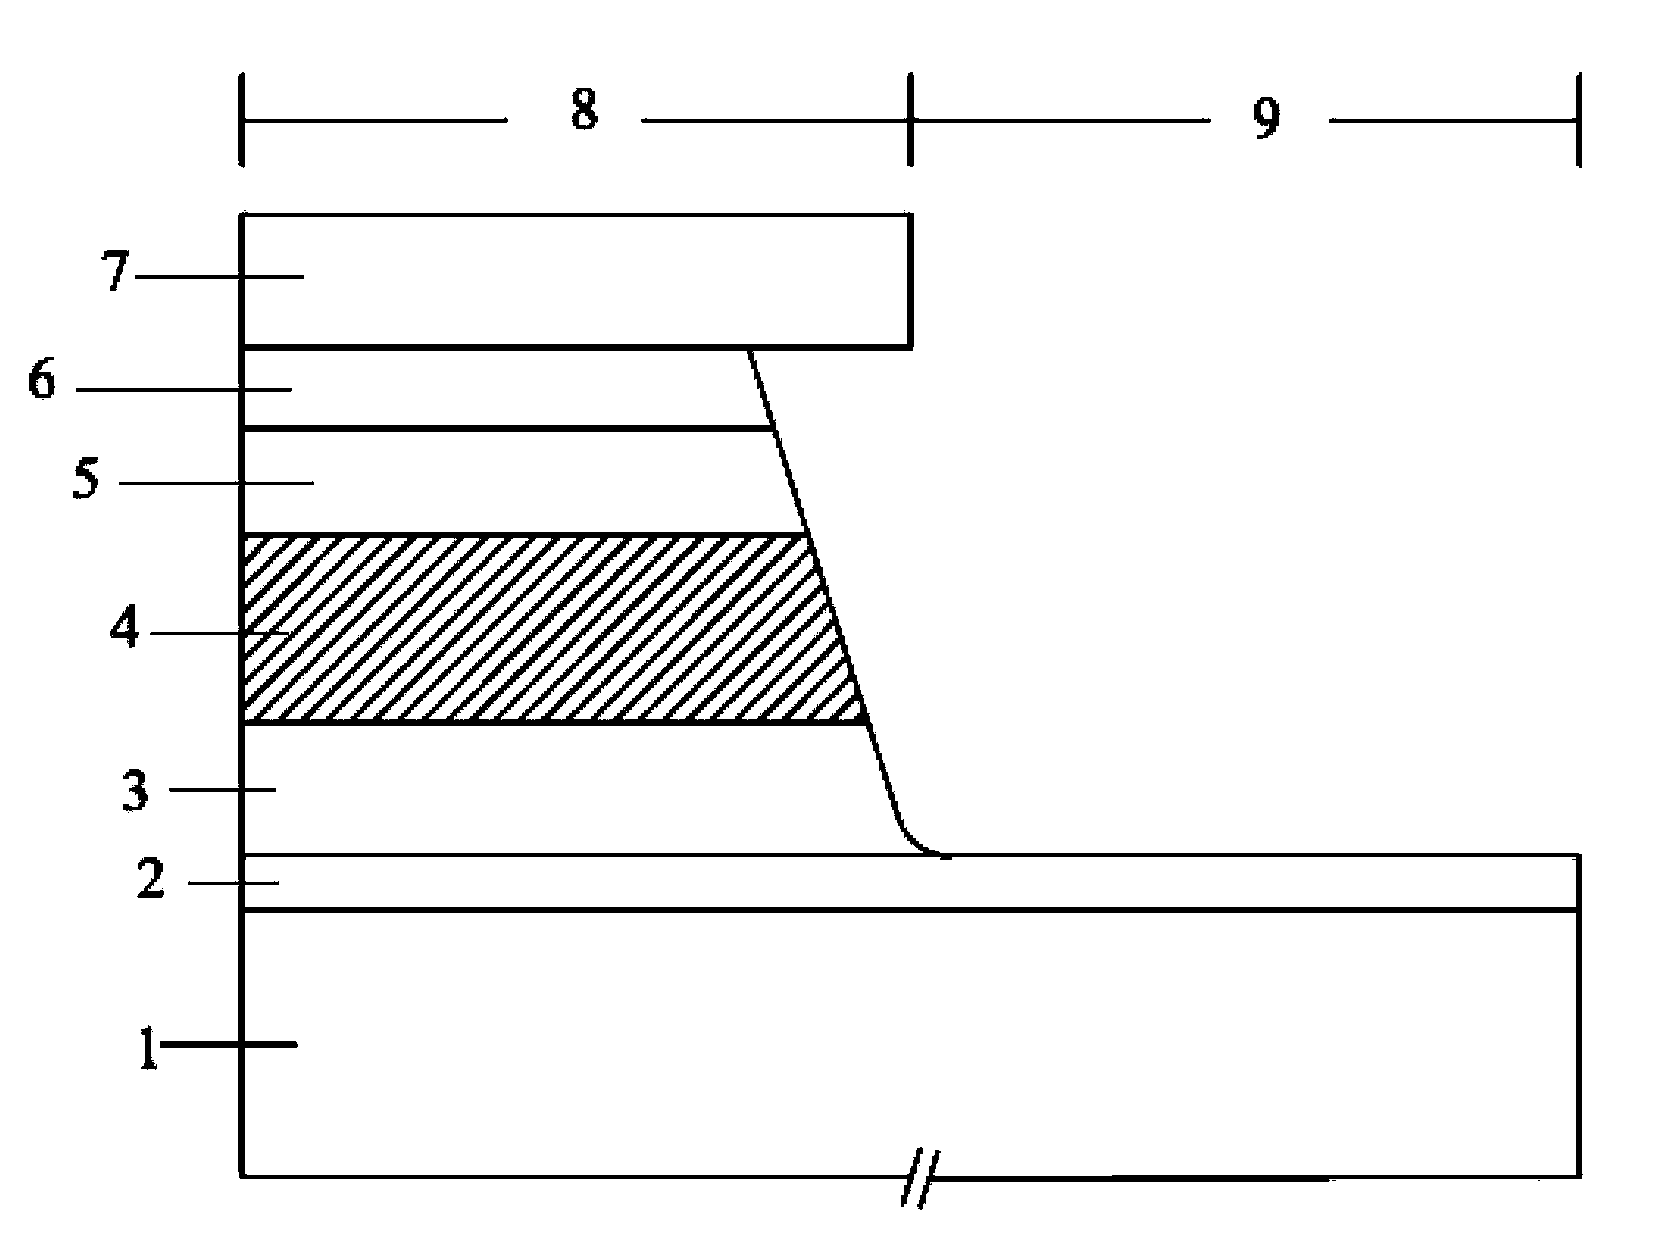 Multiple-quantum well waveguide butt-coupling method